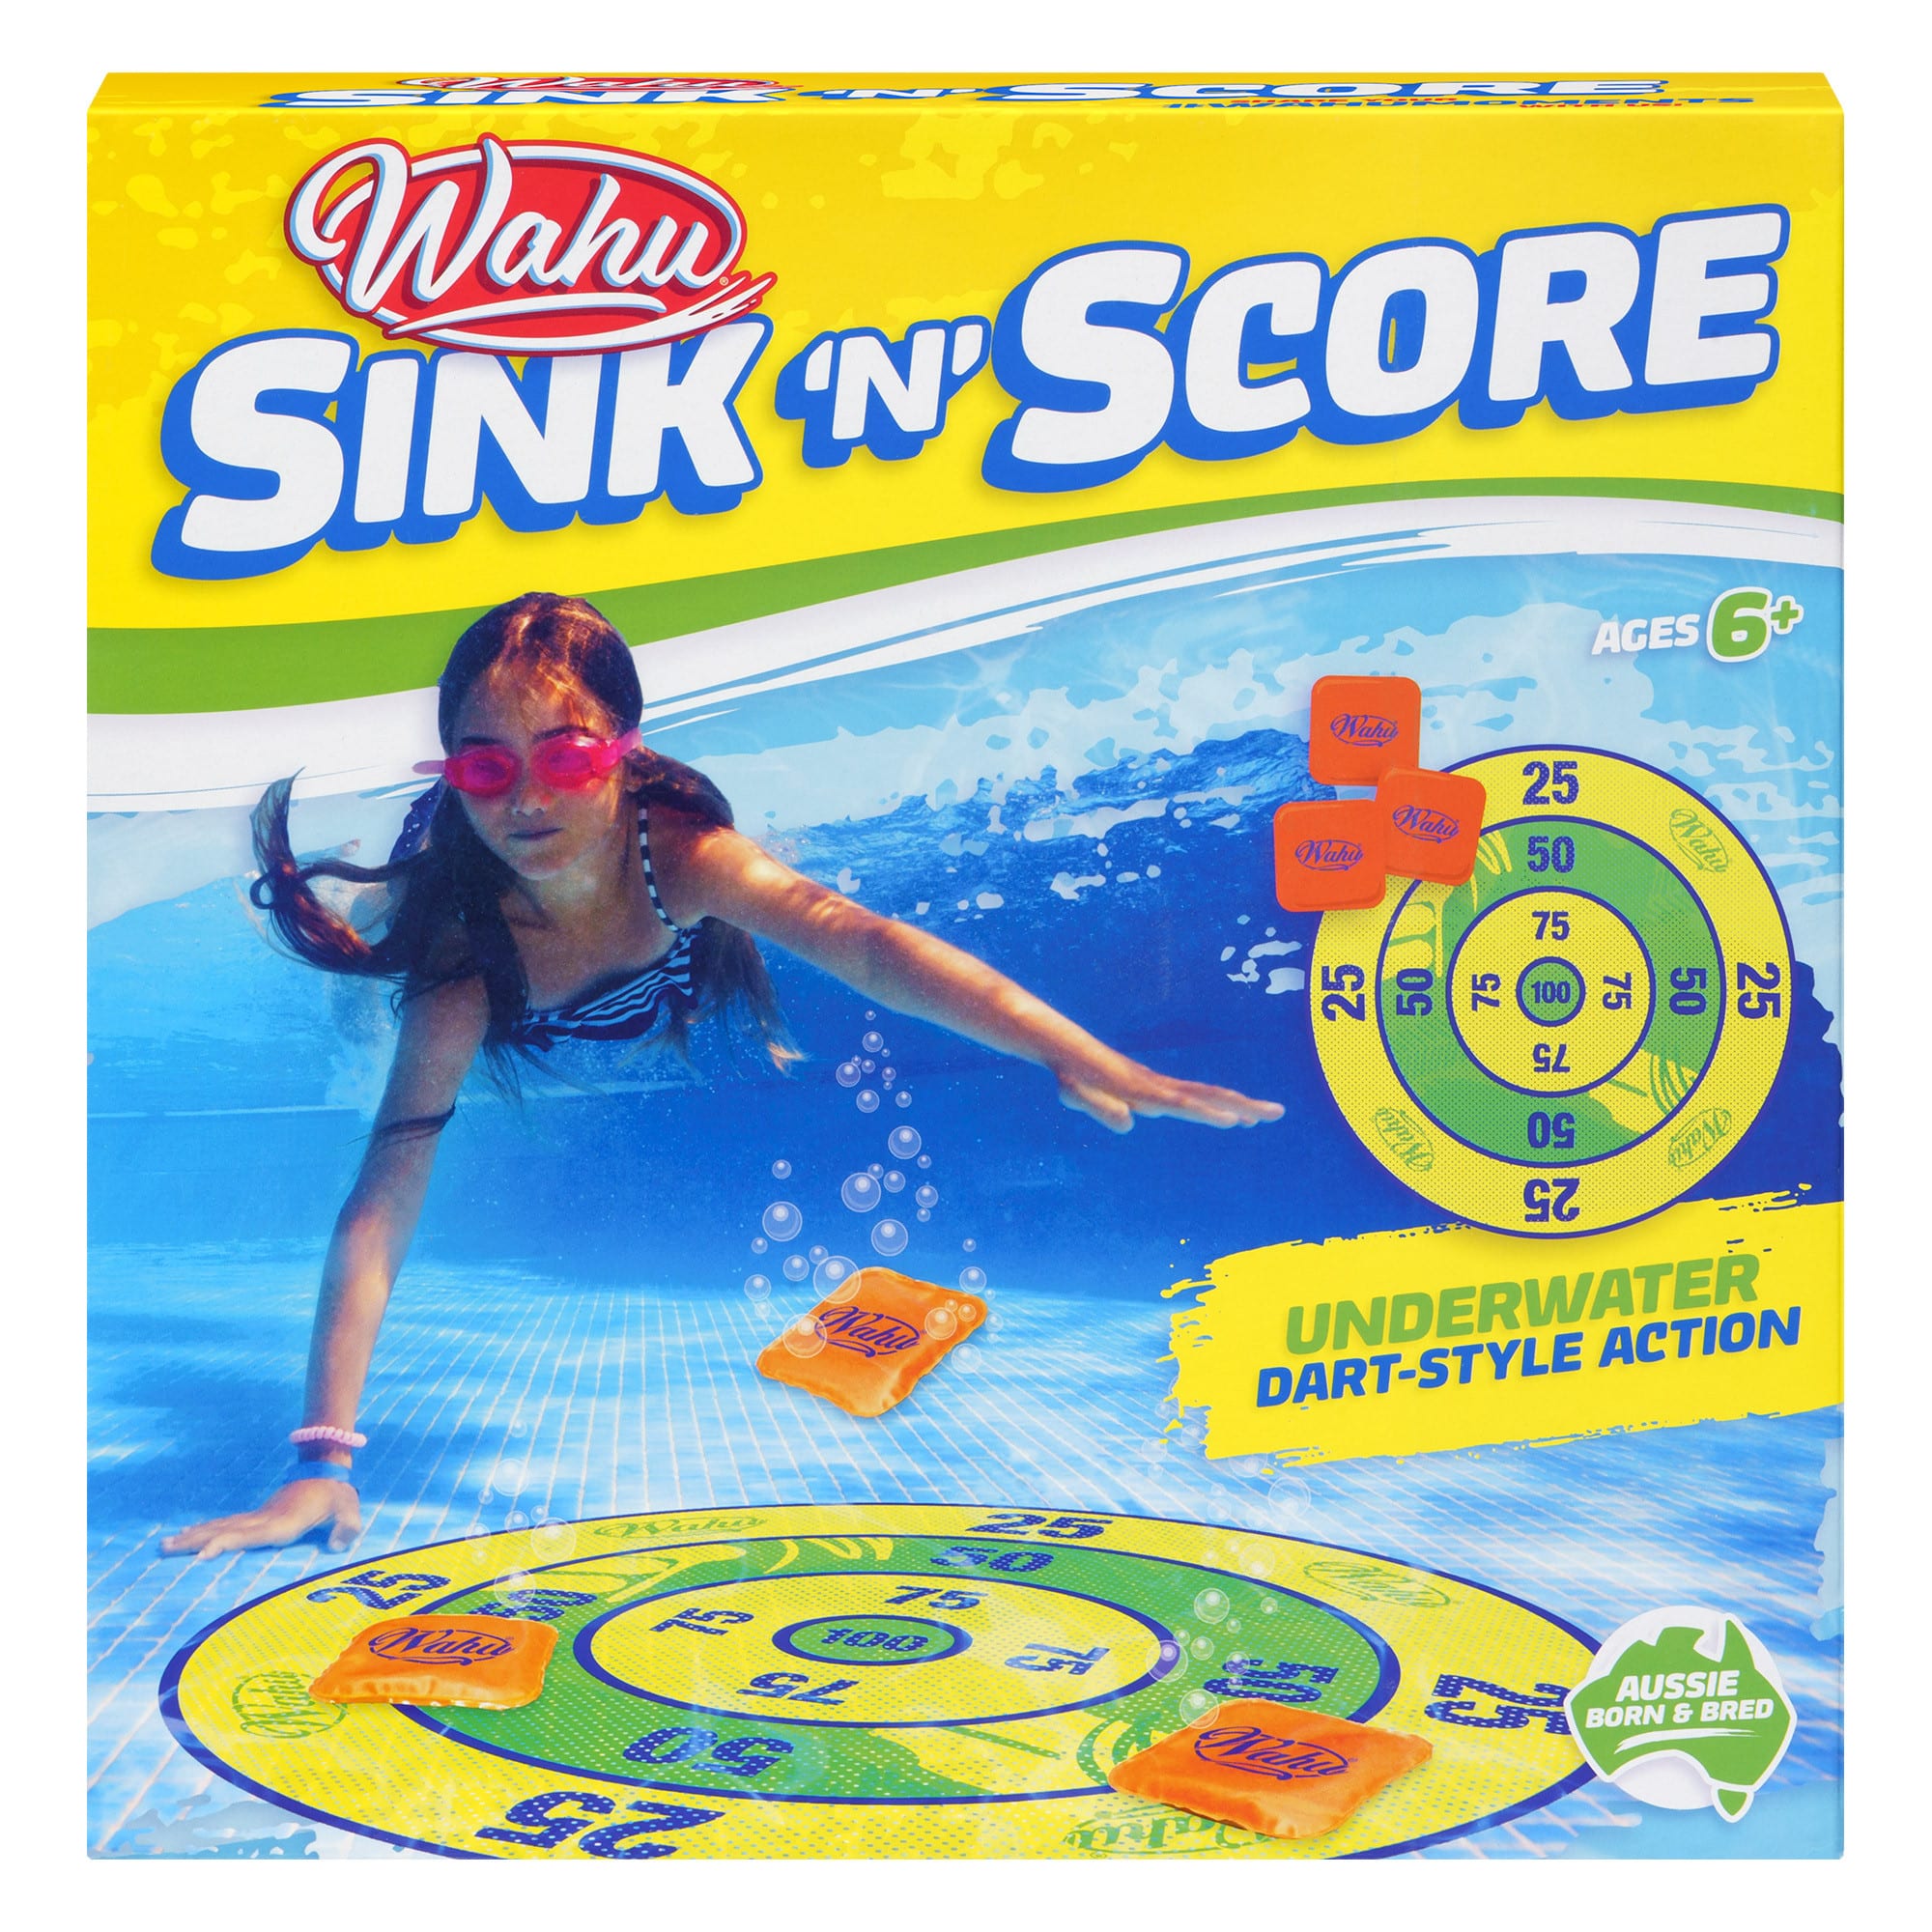 Wahu - Sink N Score